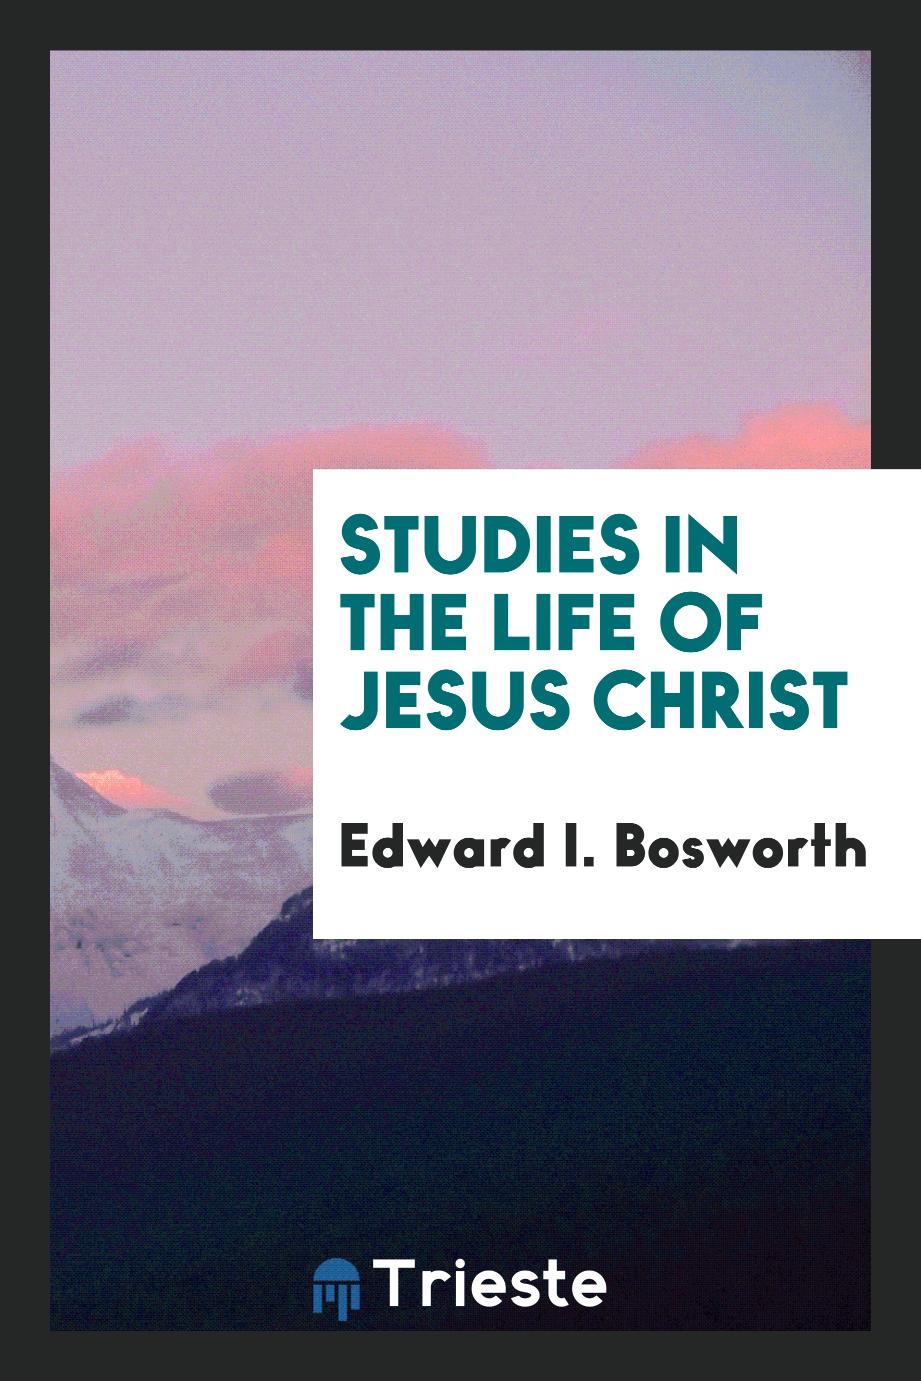 Studies in the life of Jesus Christ